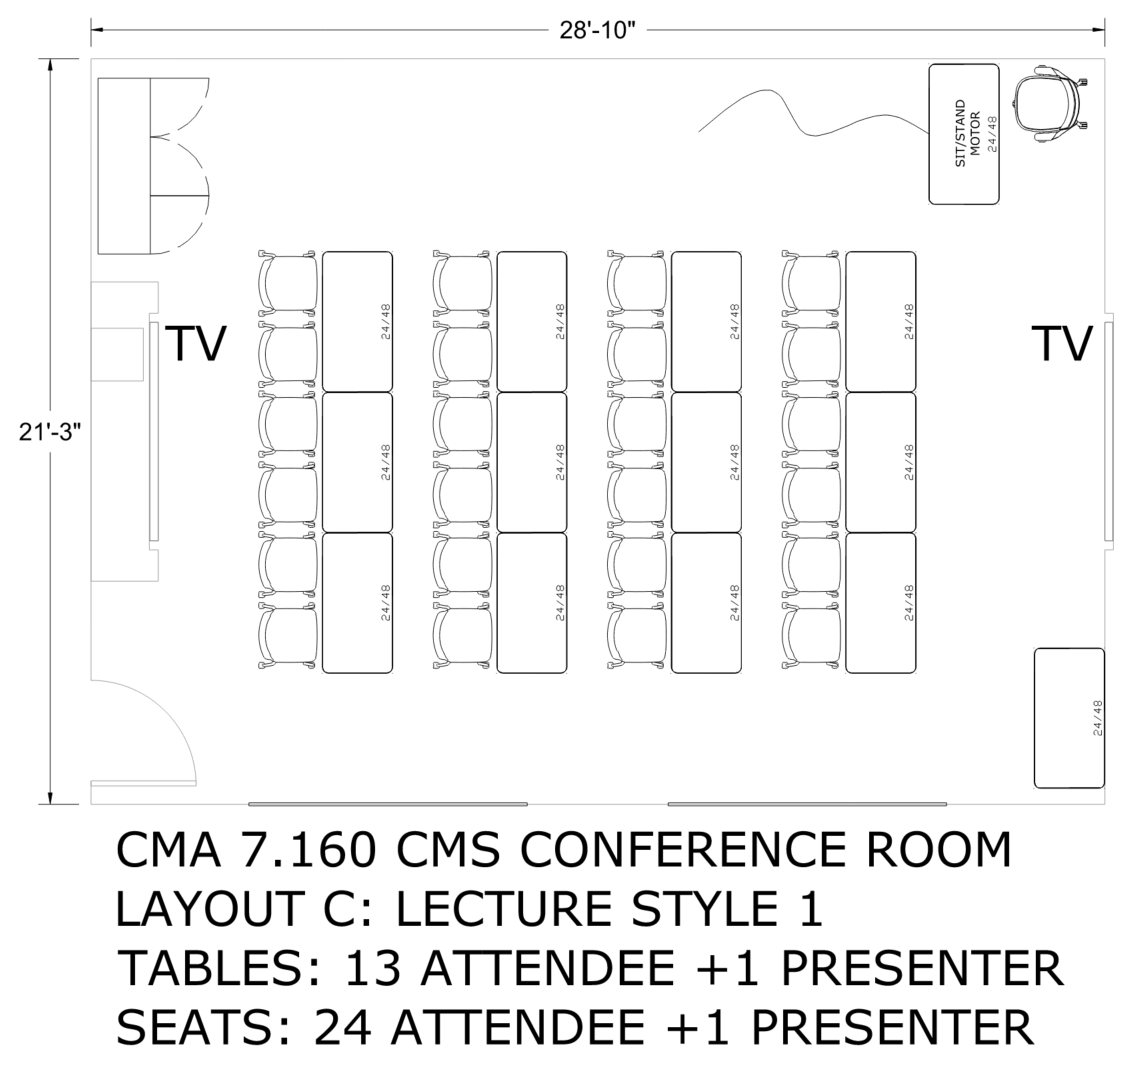 CMA 7.160 Floorplan Layout C - Lecture Style 1